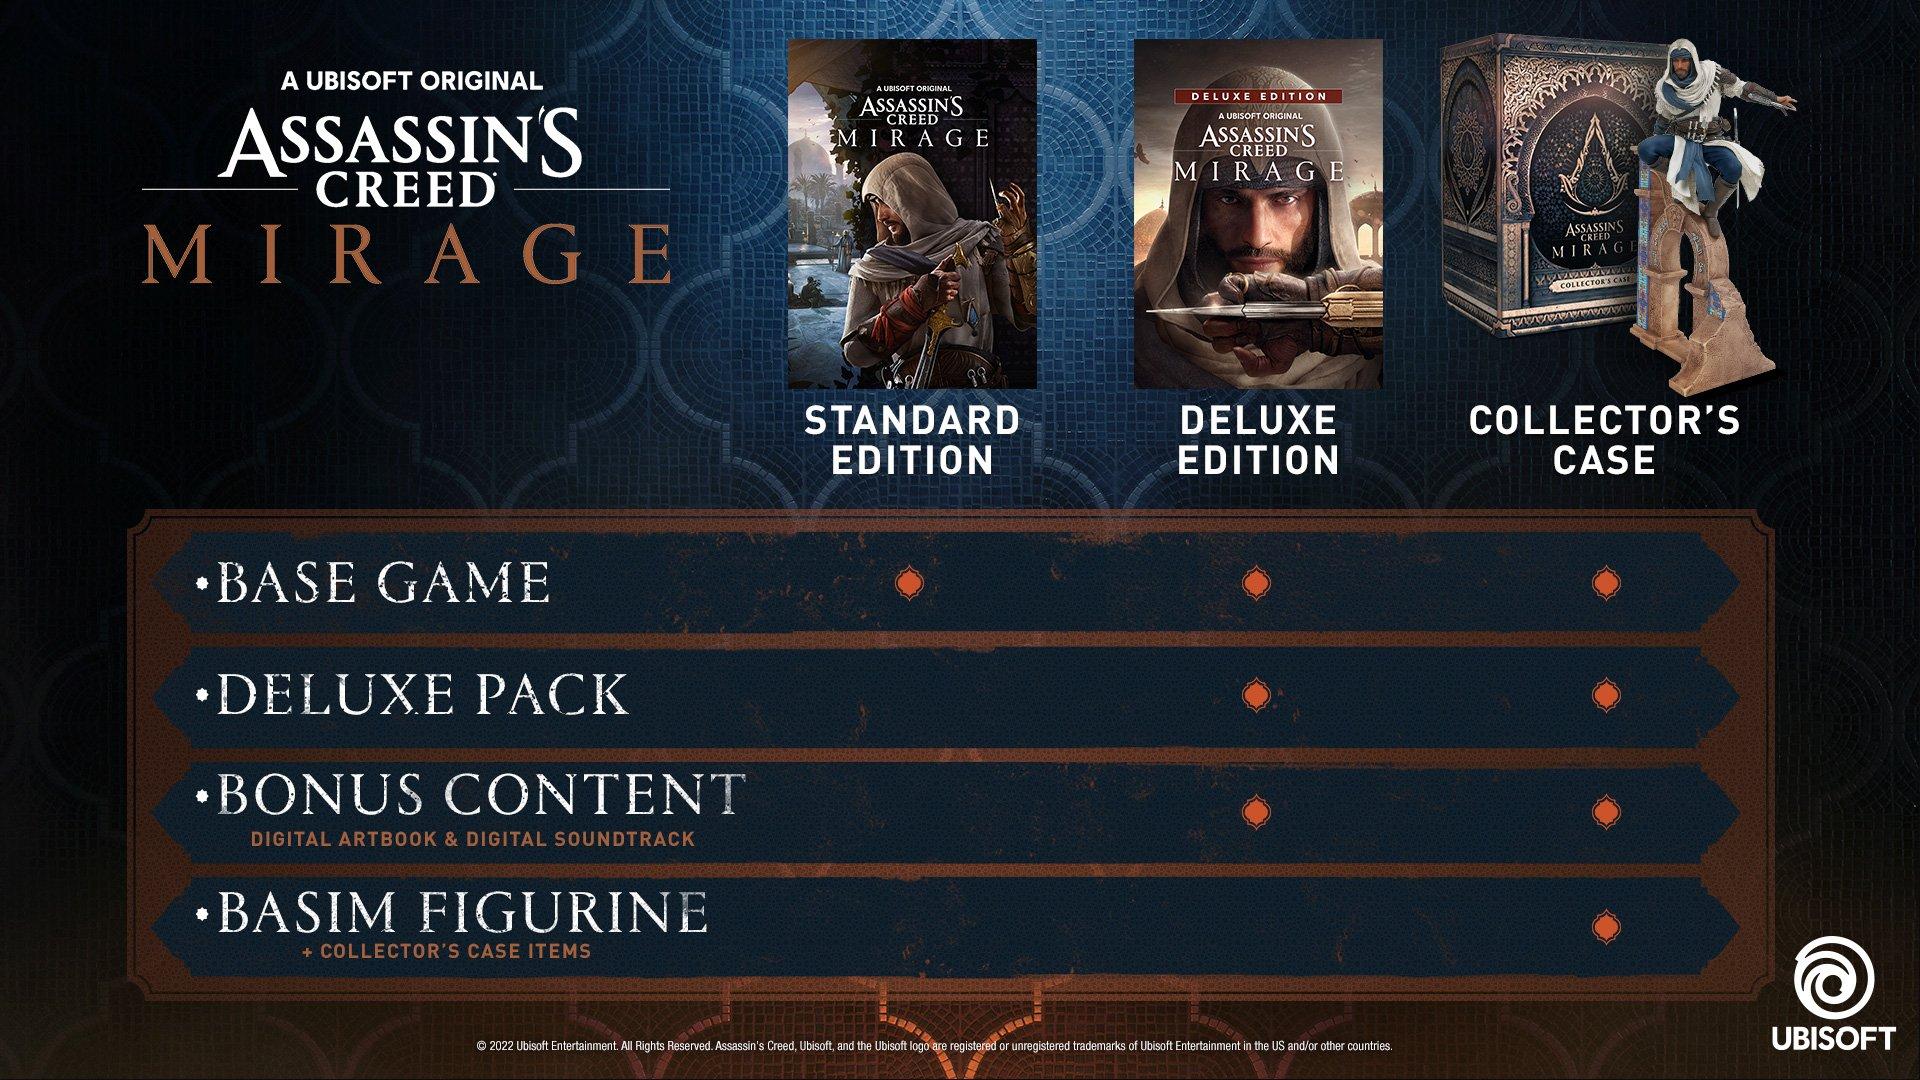 Game Assassin's Creed Mirage - PS5 na Americanas Empresas